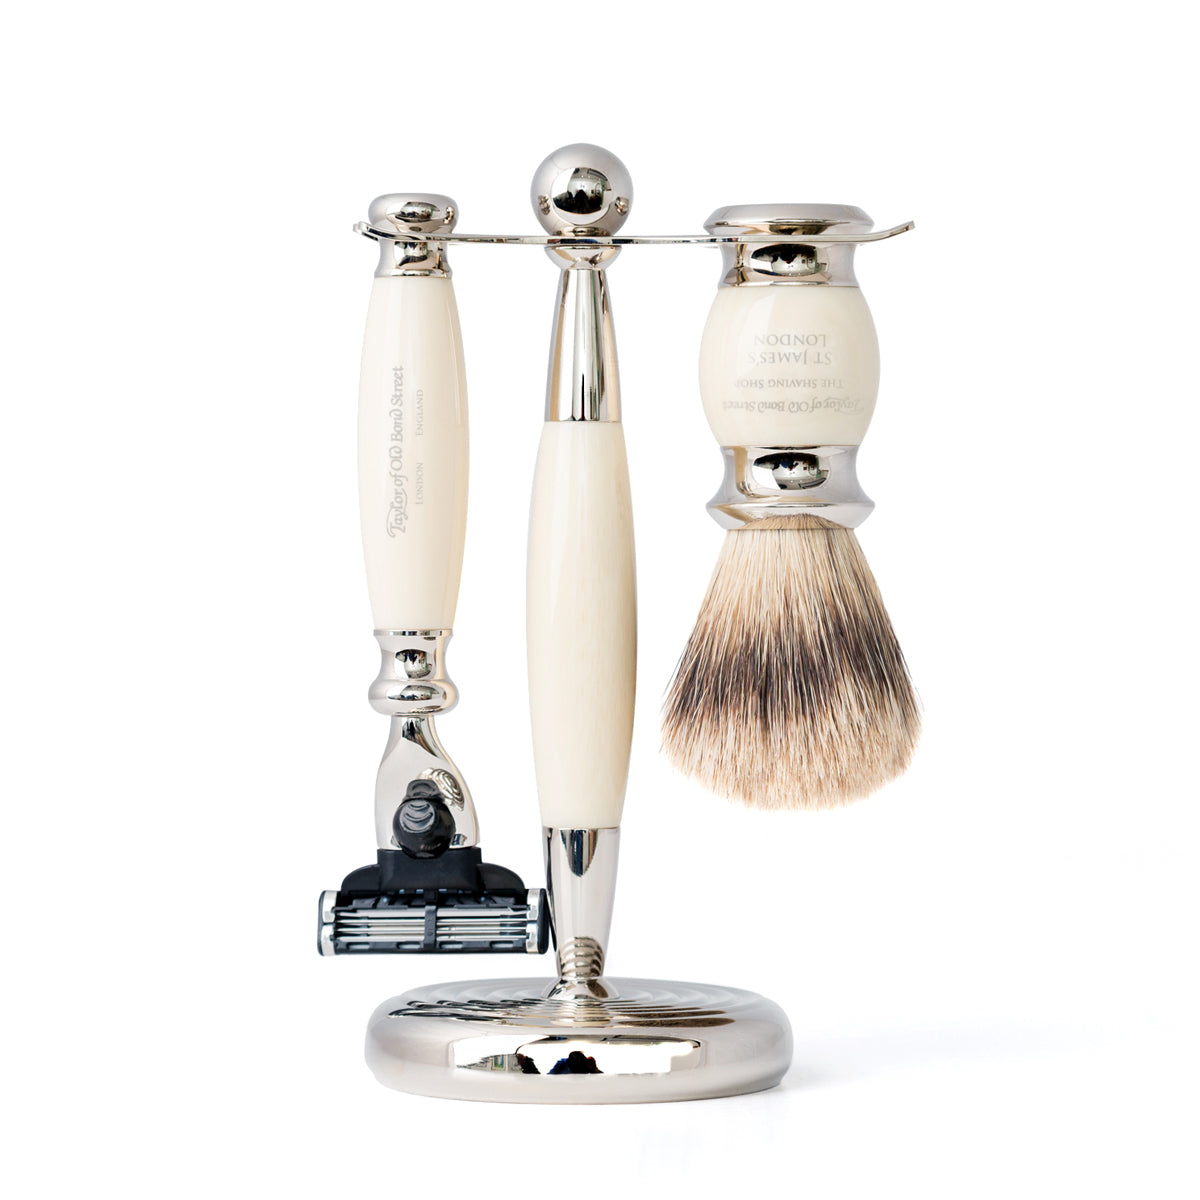 Taylor of Old Bond Street Super Mach3 Edwardian Shaving Set in Imitation Ivory